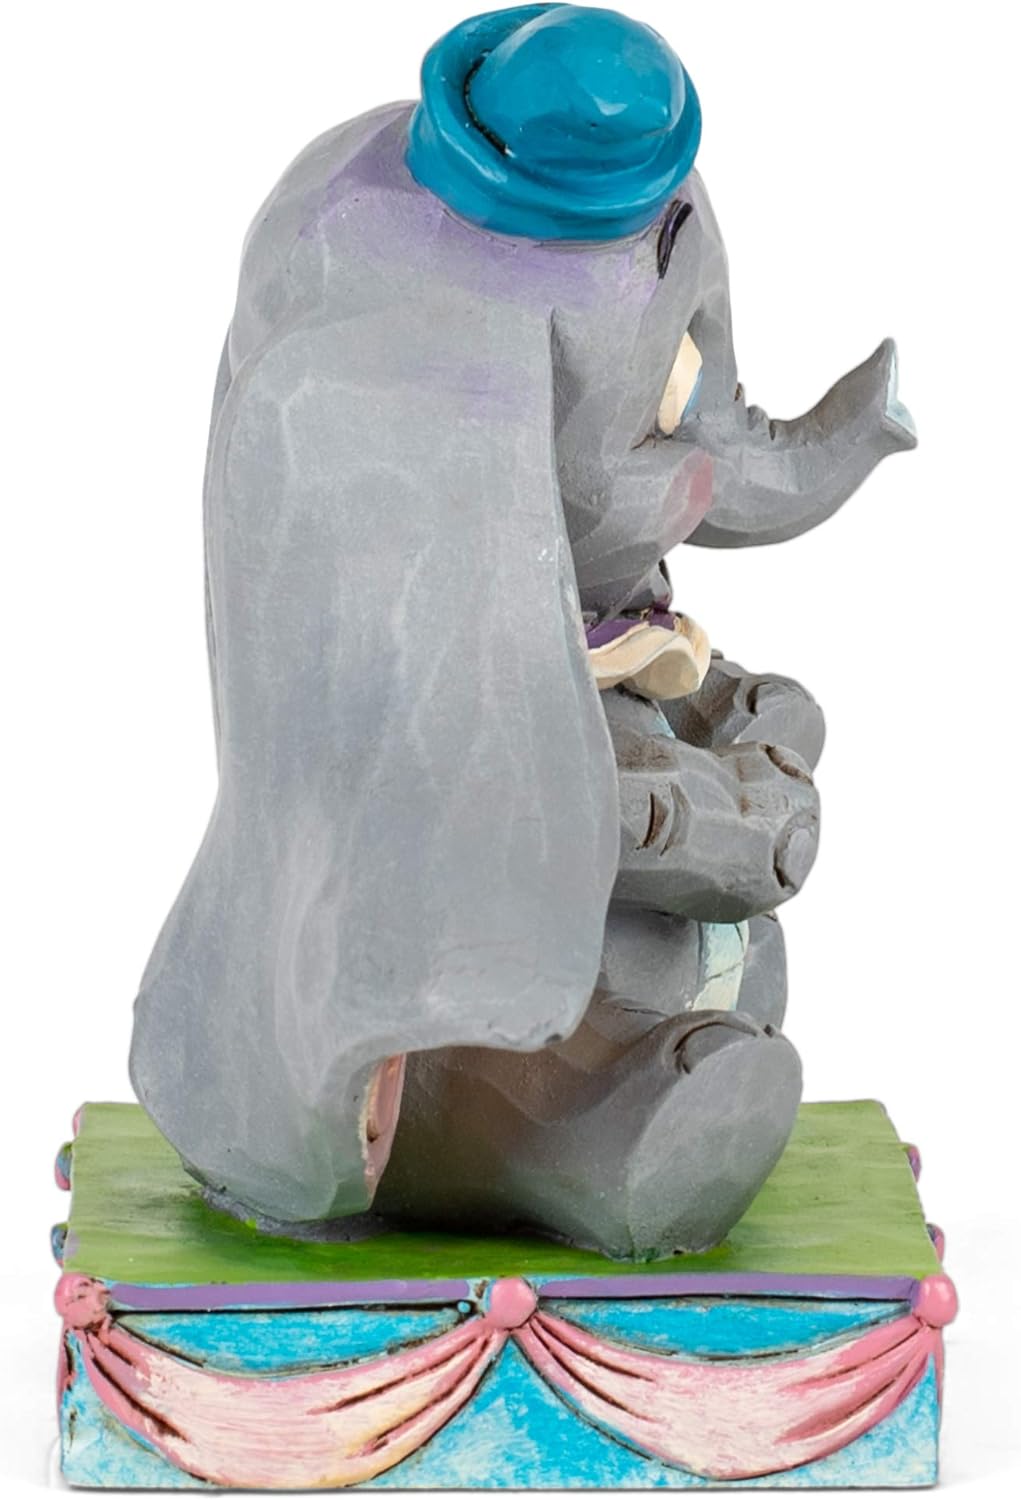 Baby Mine (Dumbo Figur) - Disney by Jim Shore